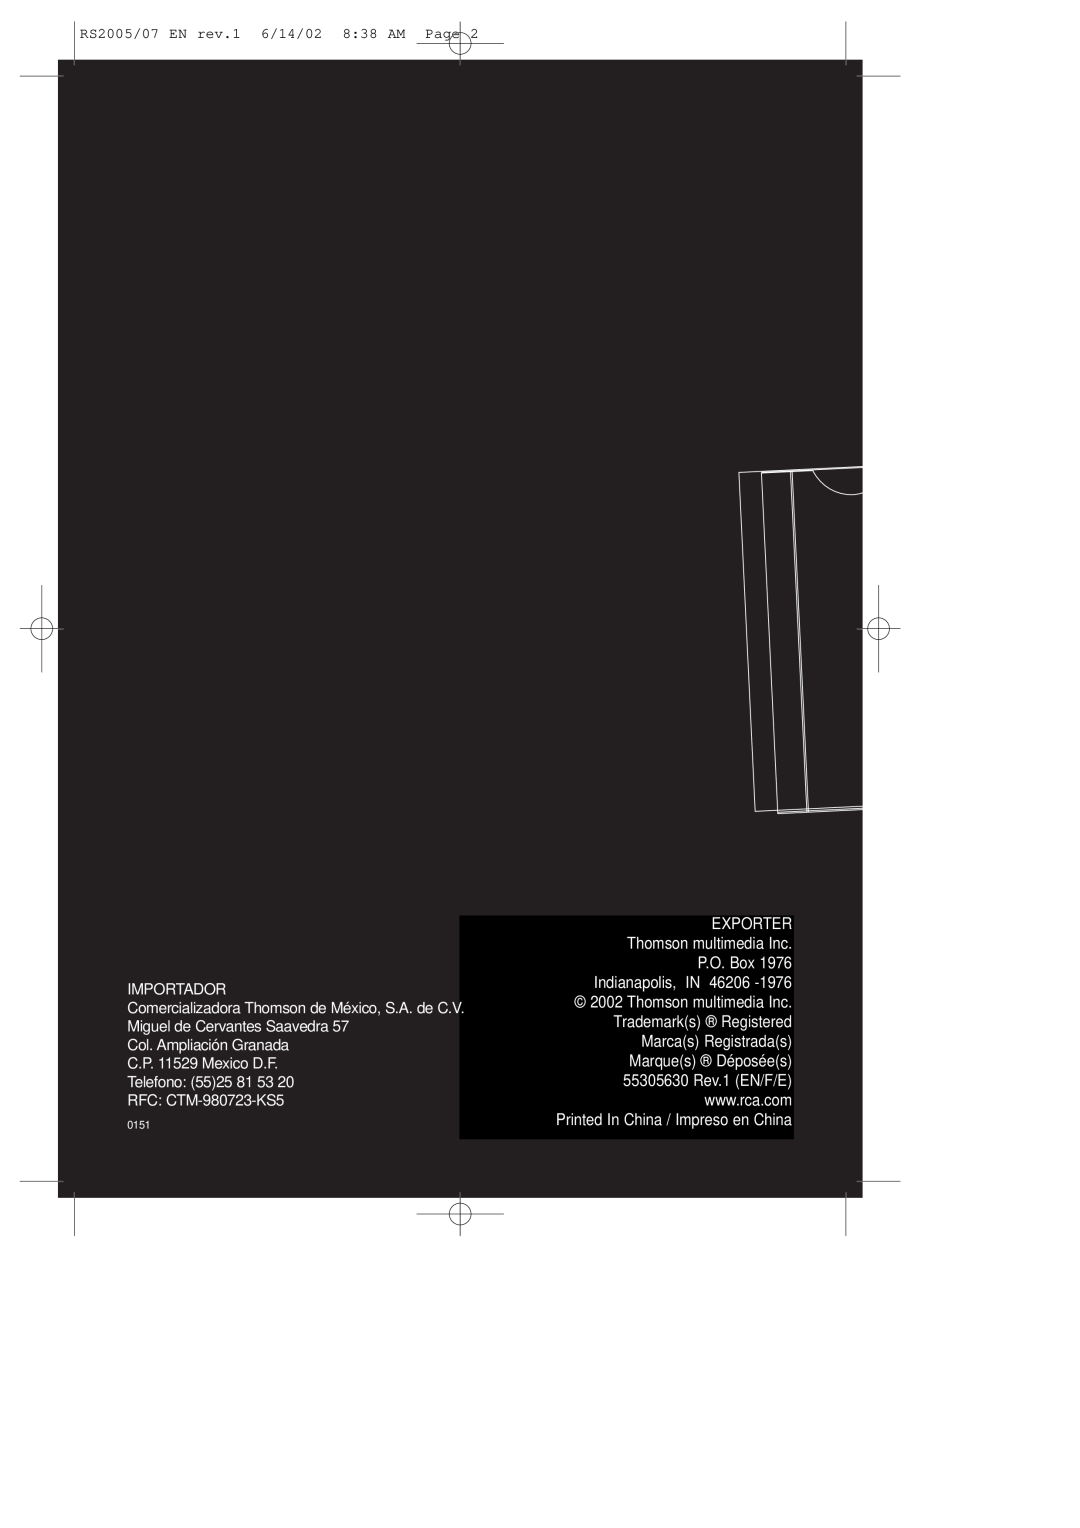 RCA manual Printed In China / Impreso en China, RS2005/07 EN rev.1 6/14/02 8:38 AM Page 